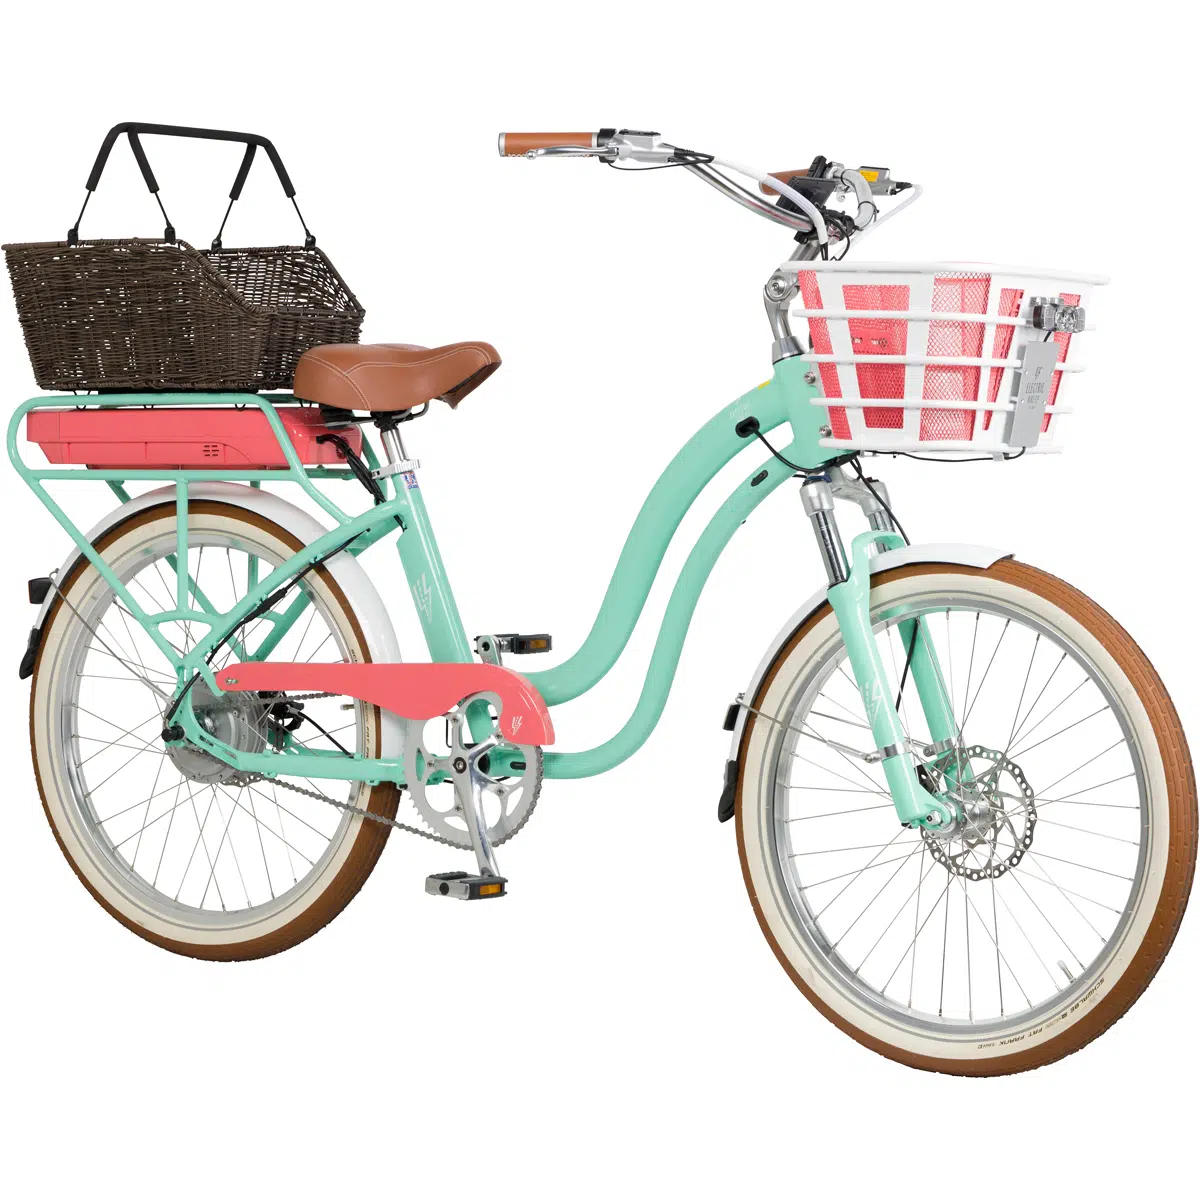 Electric-Bike-Company-Model-S-keyes-coral-frontangle-rattanbasket